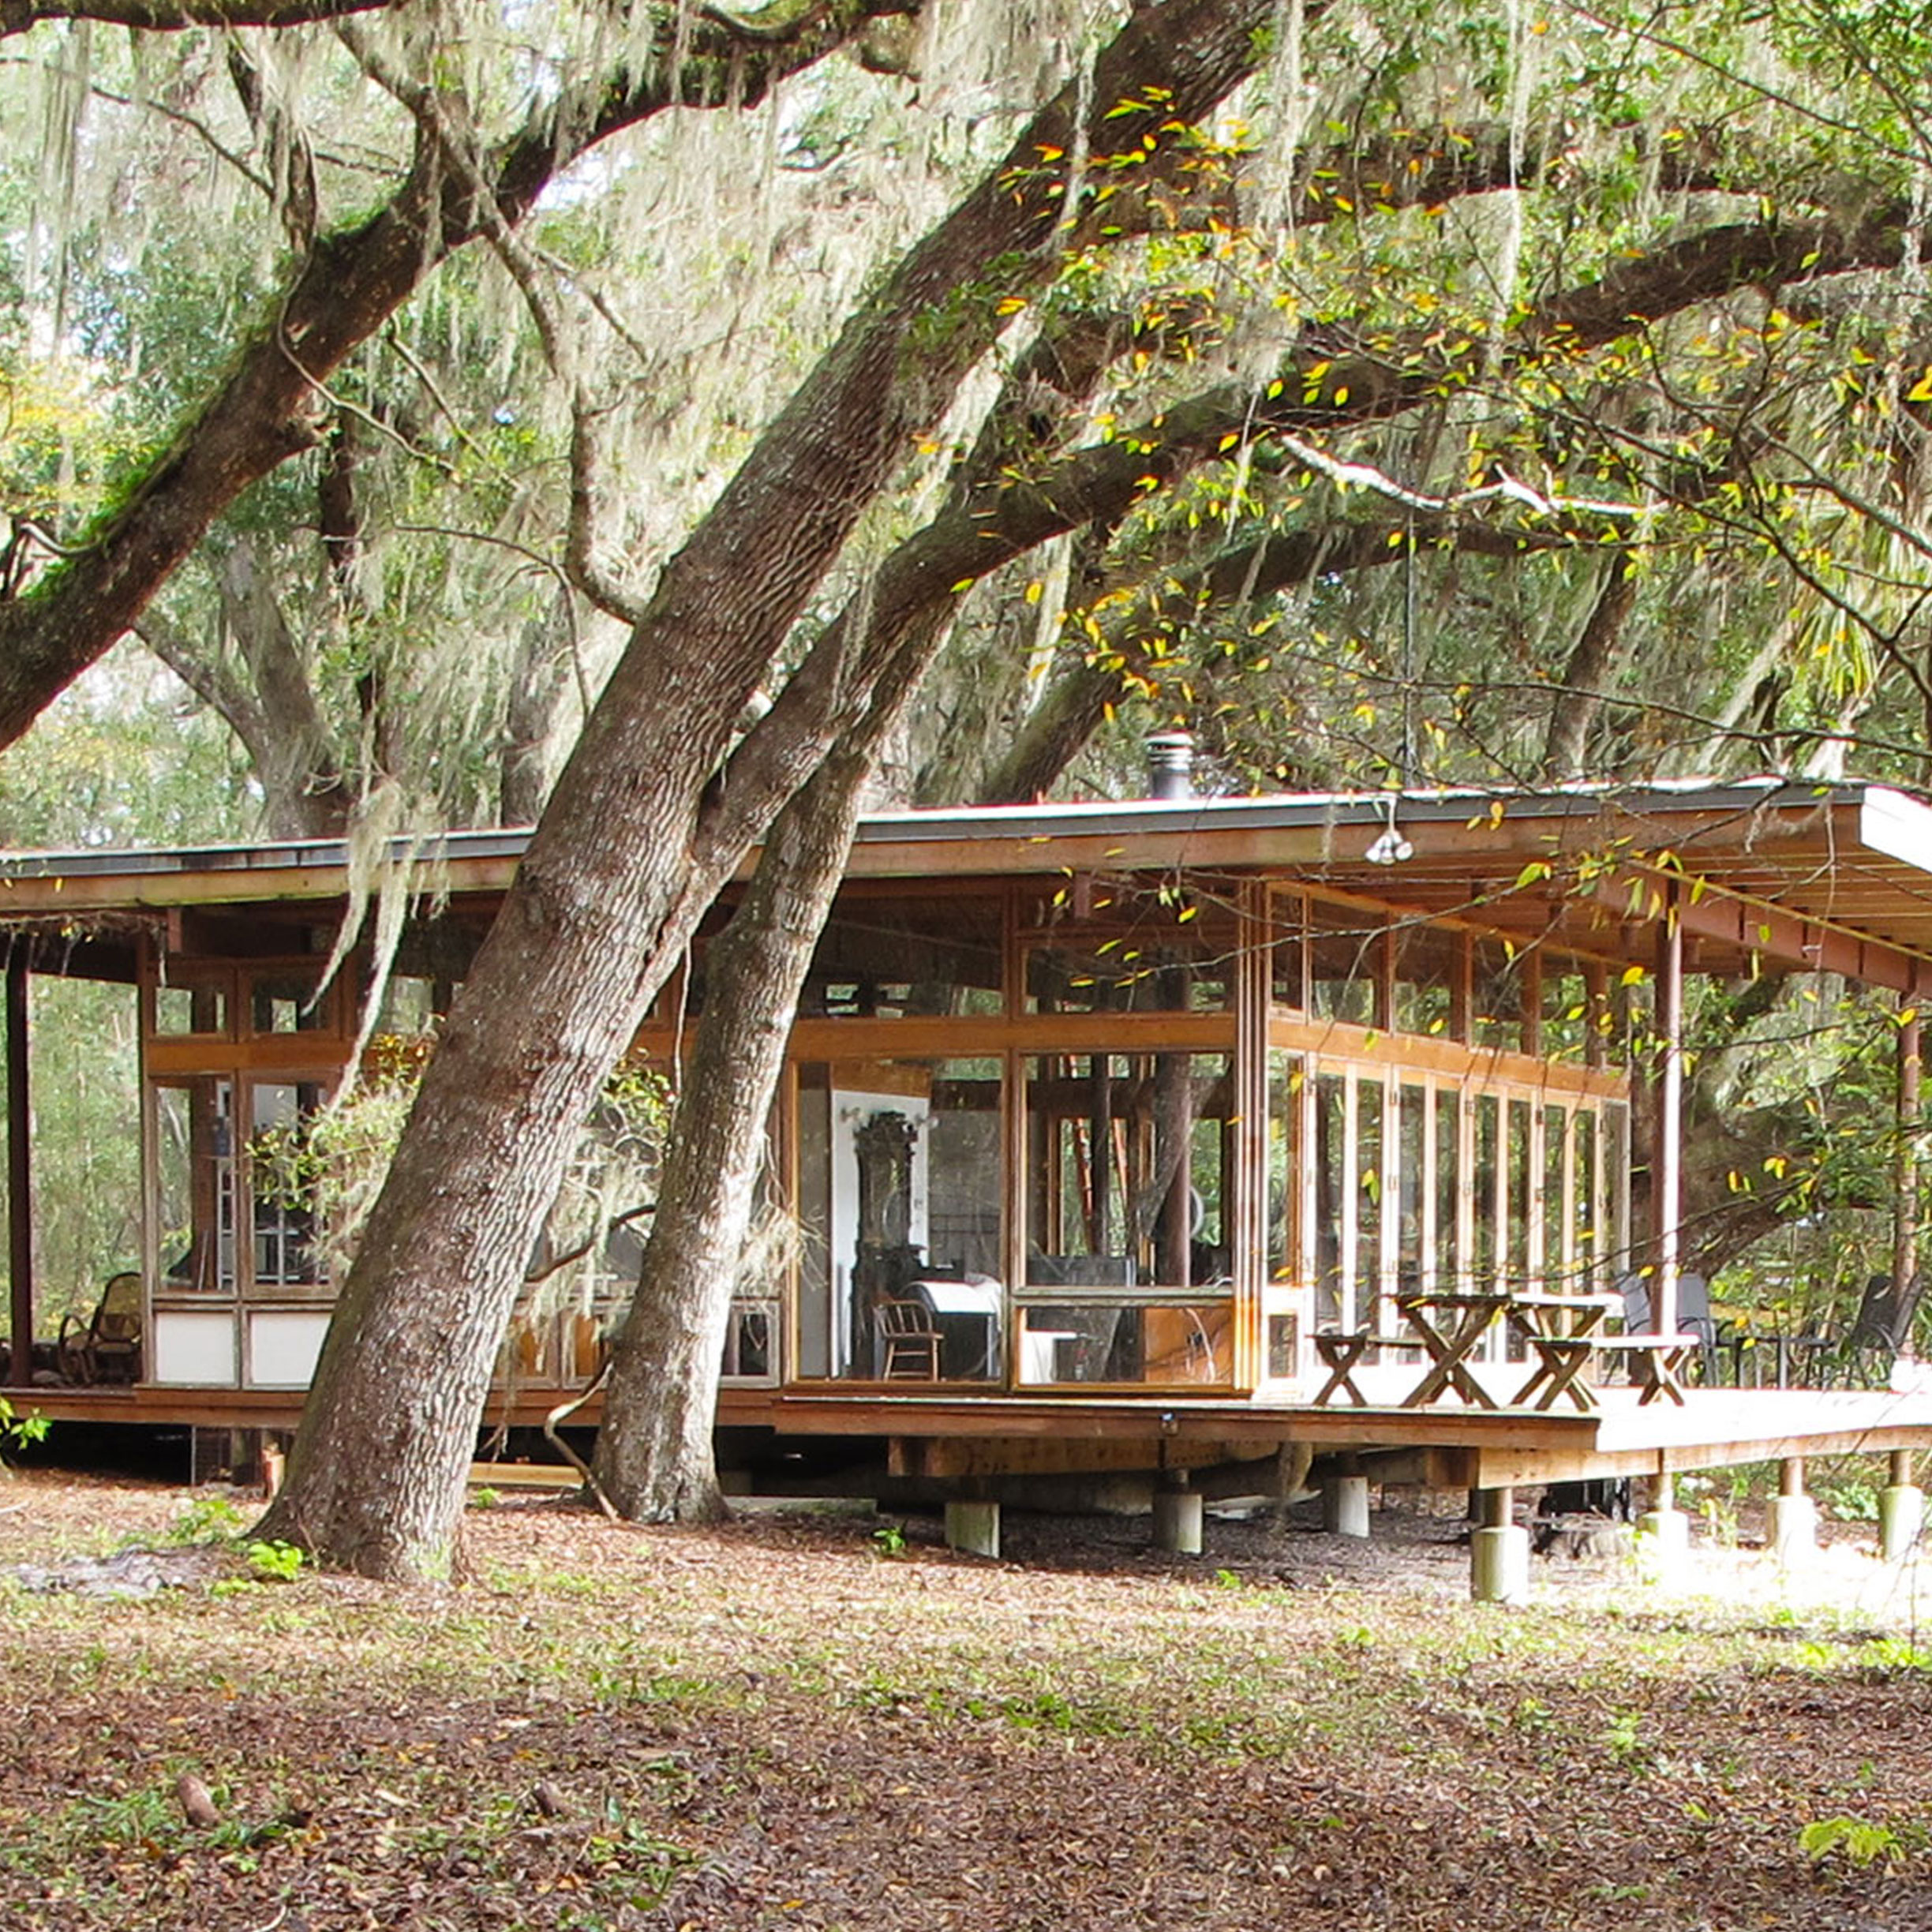 Ira's cabin